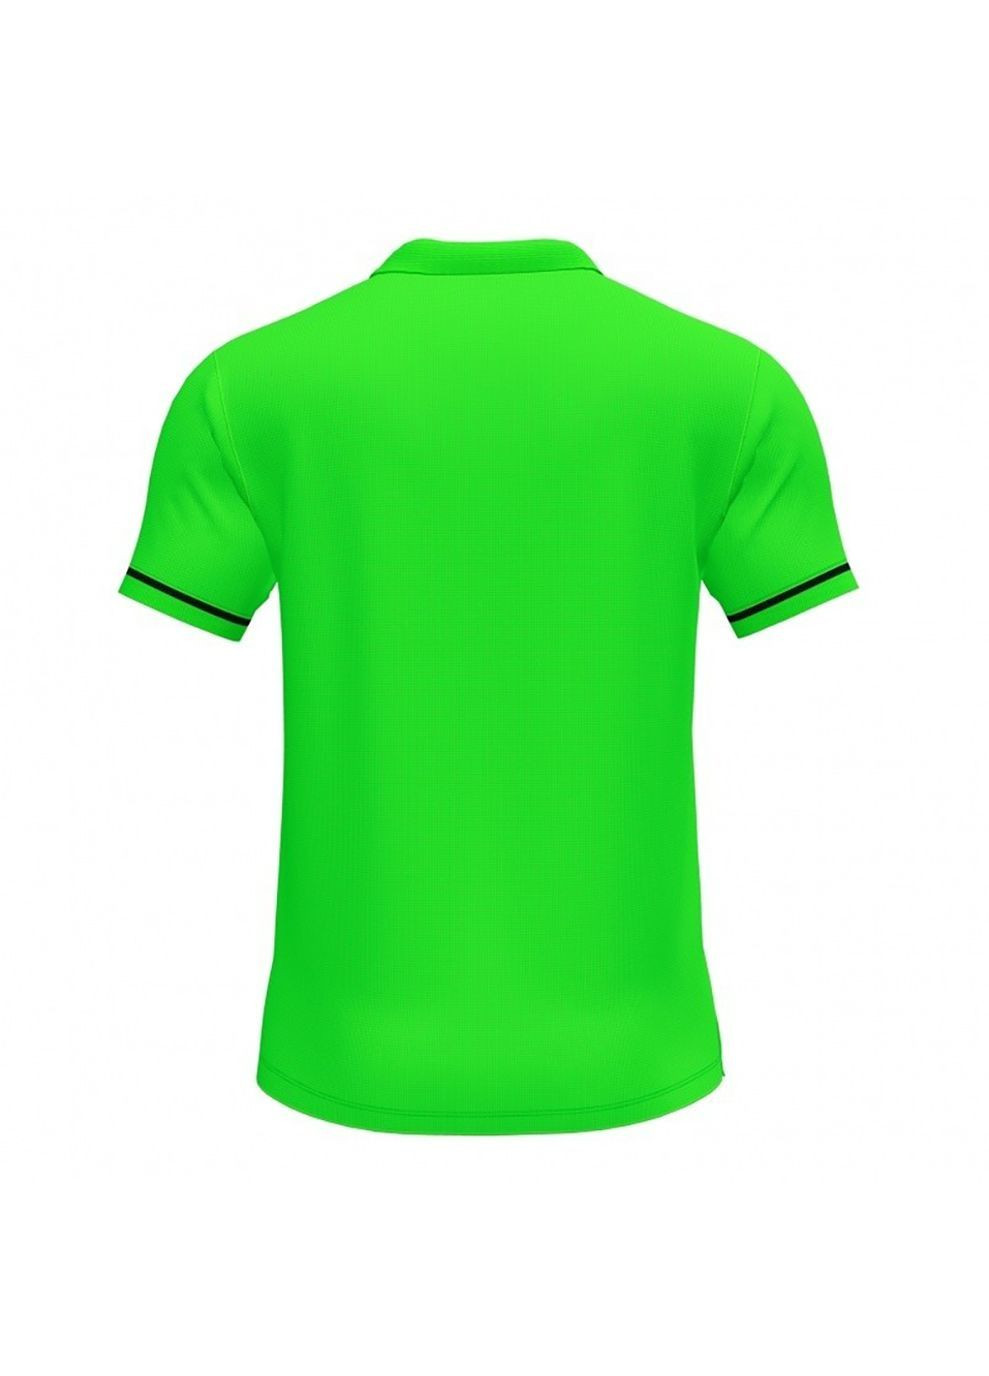 Зеленая футболка-поло champion vi зеленый для мужчин Joma